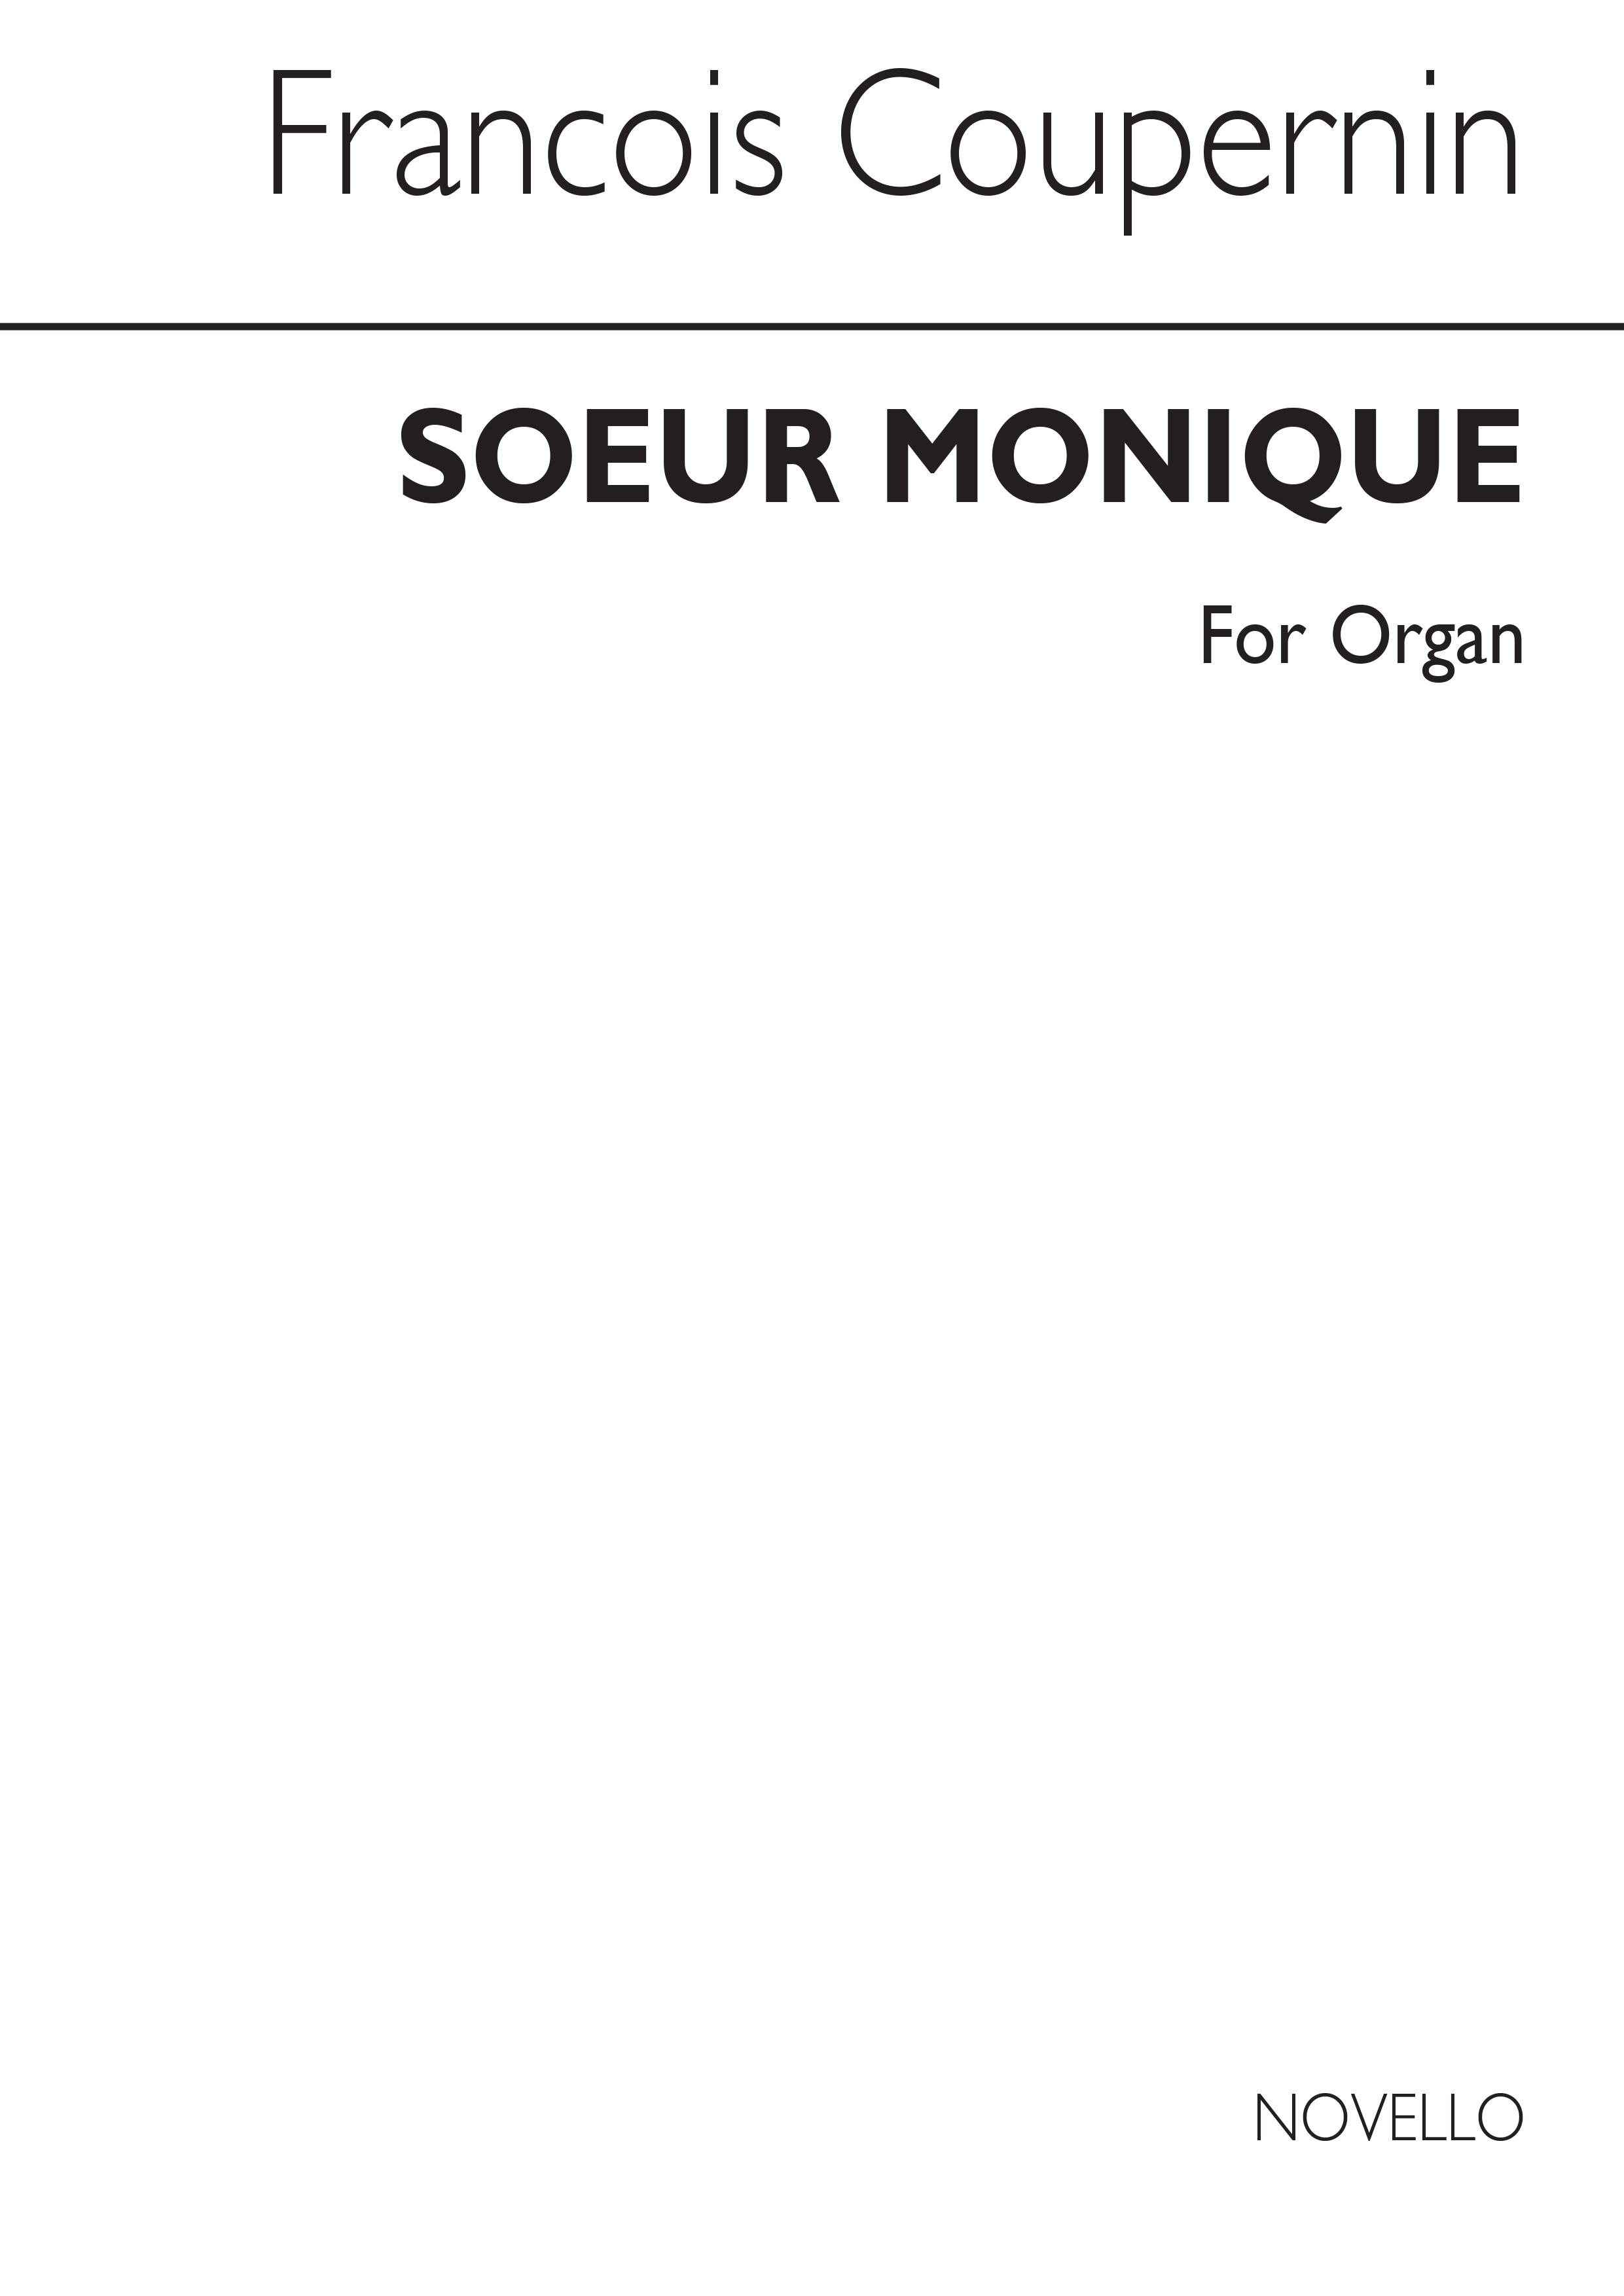 Francois Couperin: Soeur Monique (Organ)